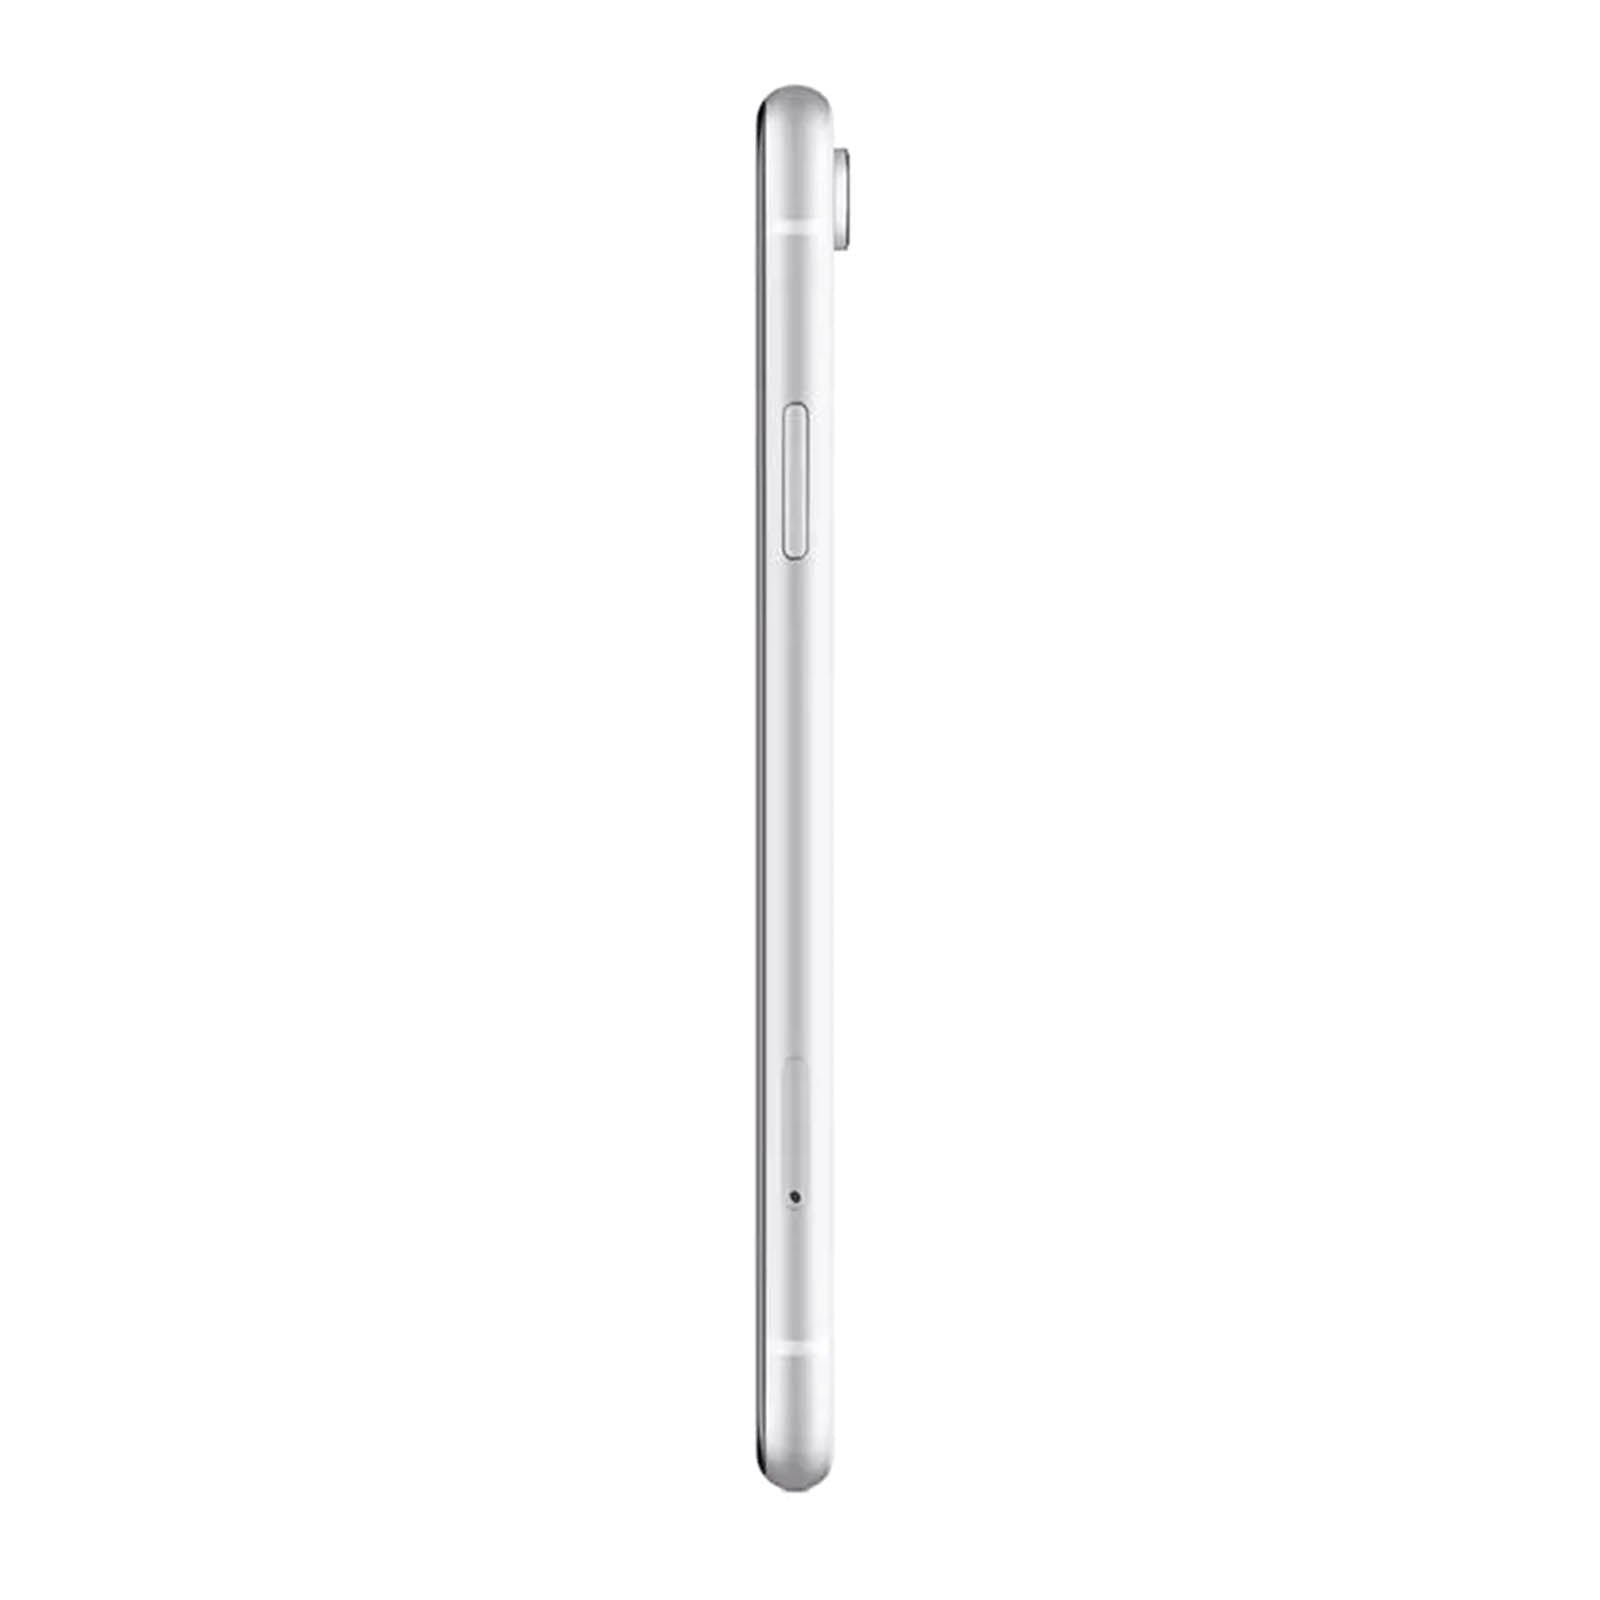 Apple iPhone XR 64GB White Pristine - T-Mobile